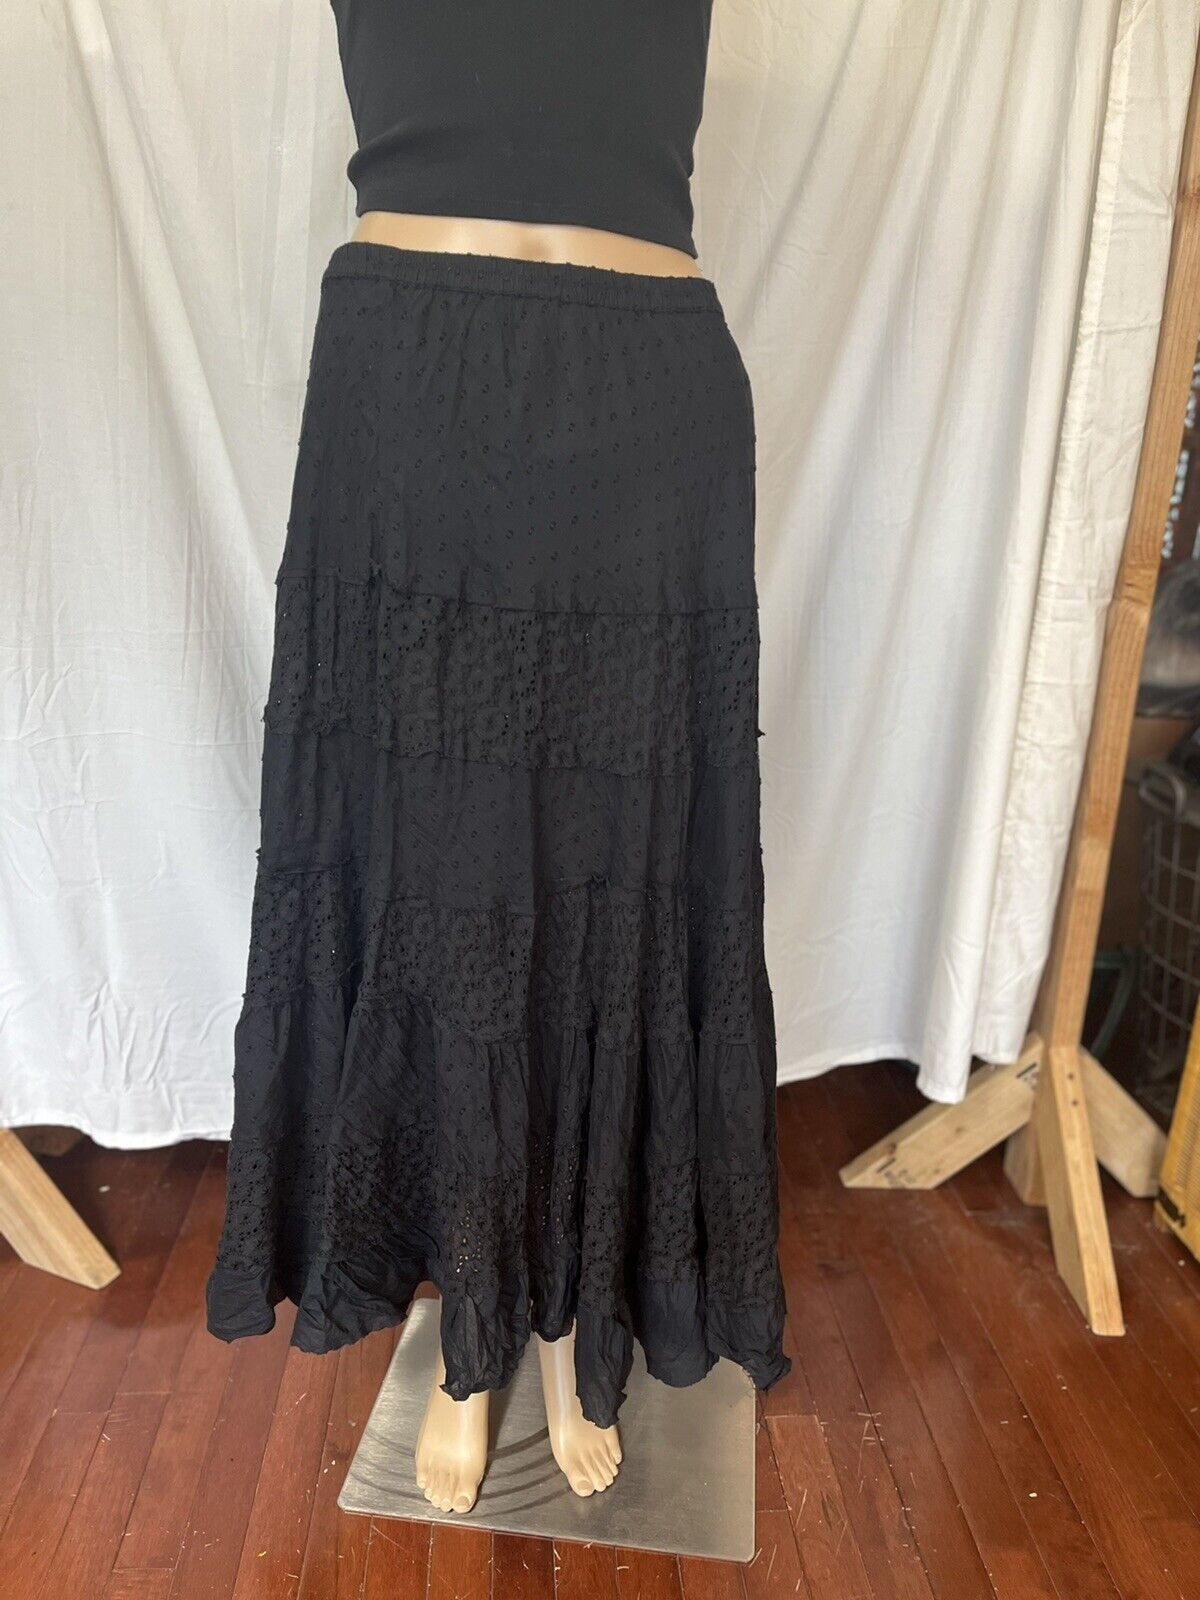 Tropez West S/M maxi | eBay skirt Vintage Saint black boho